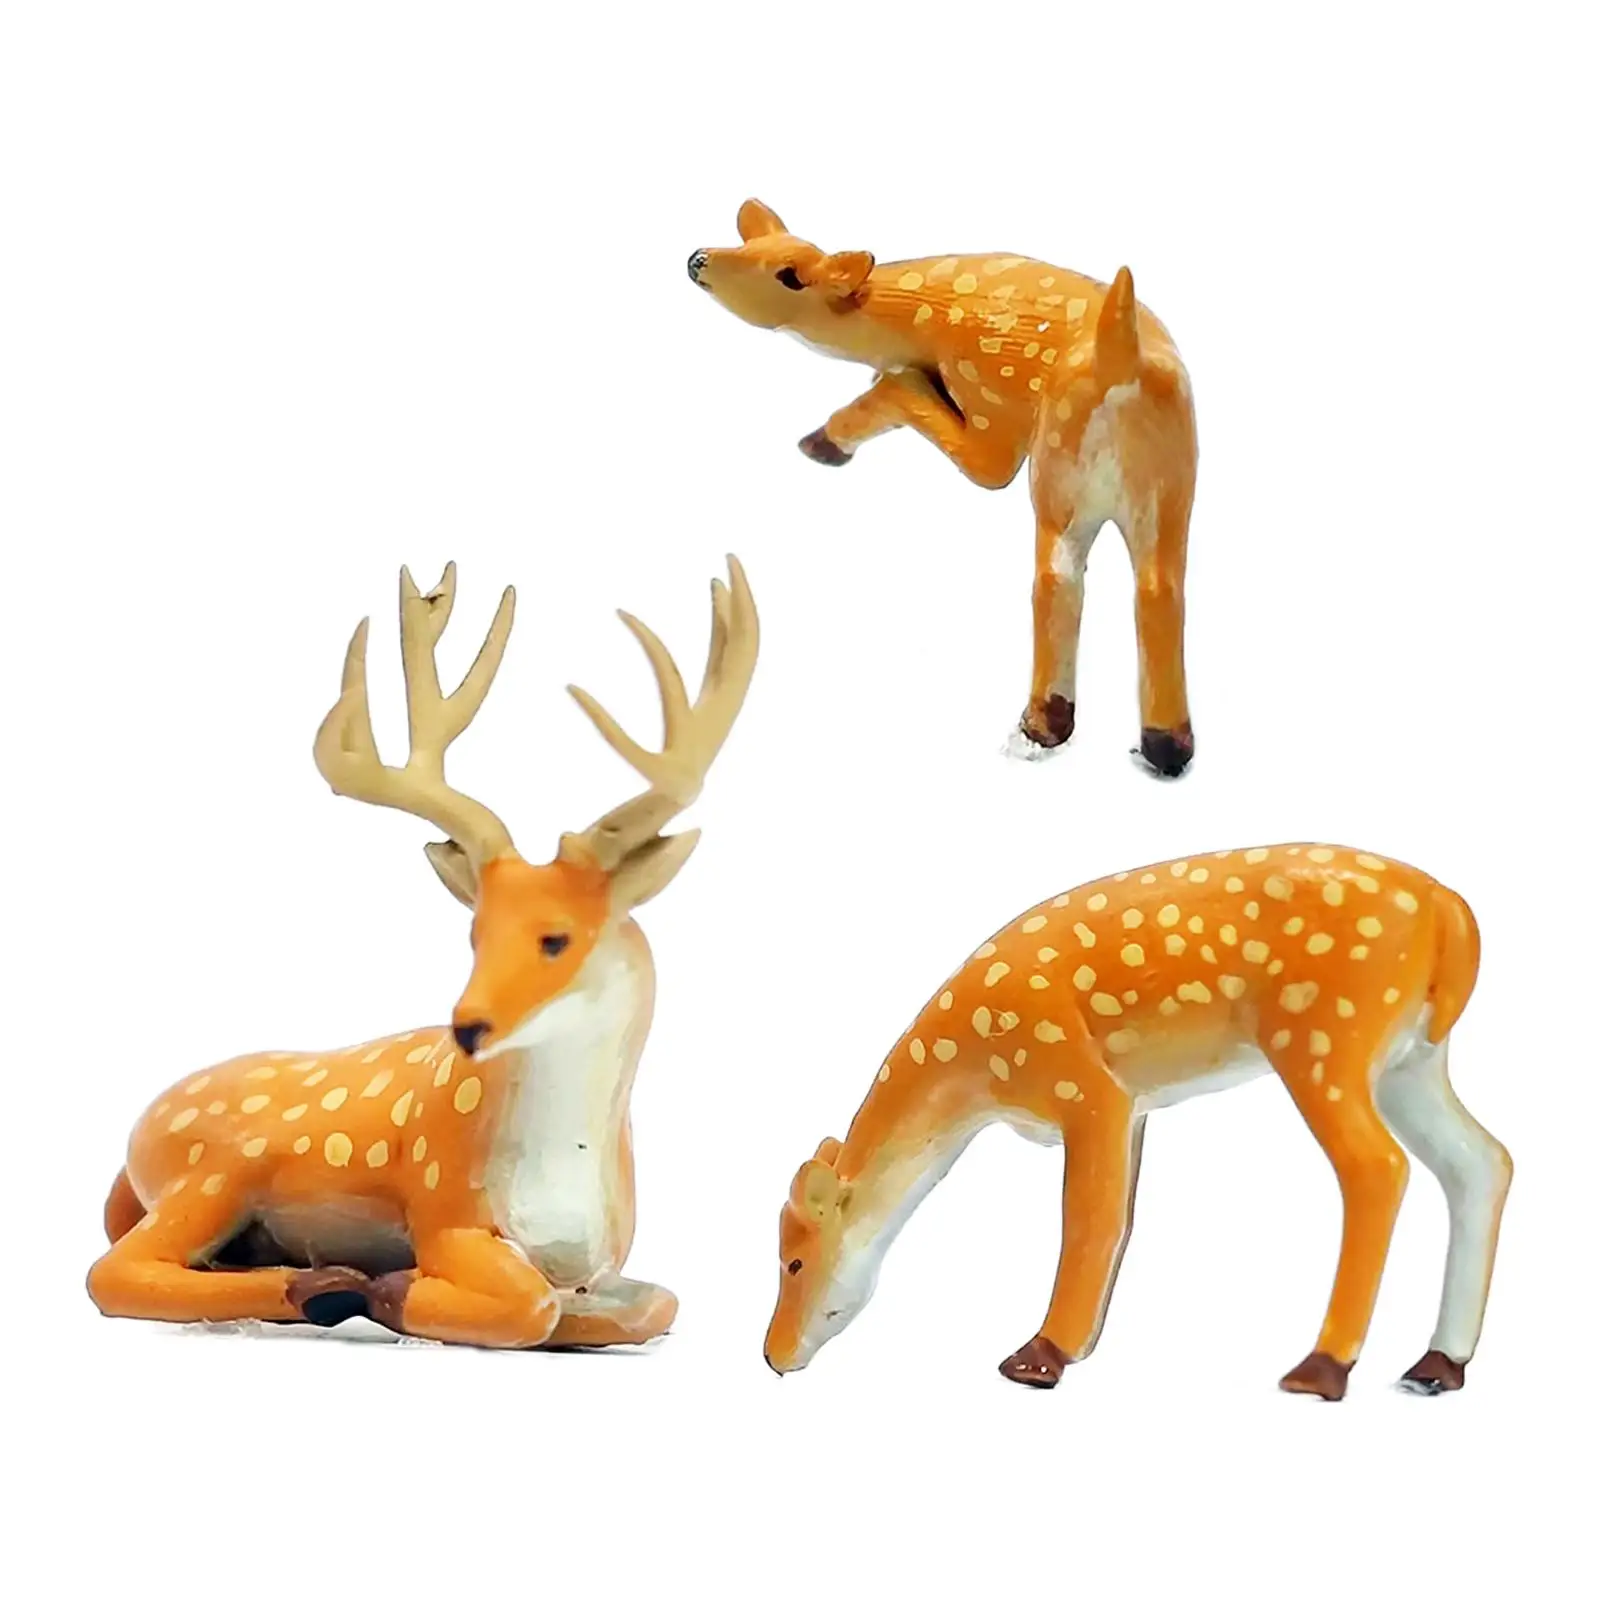 3Pcs 1:64 Miniature Statue Animal Figurine small deer Figurines for DIY Scene Ornament